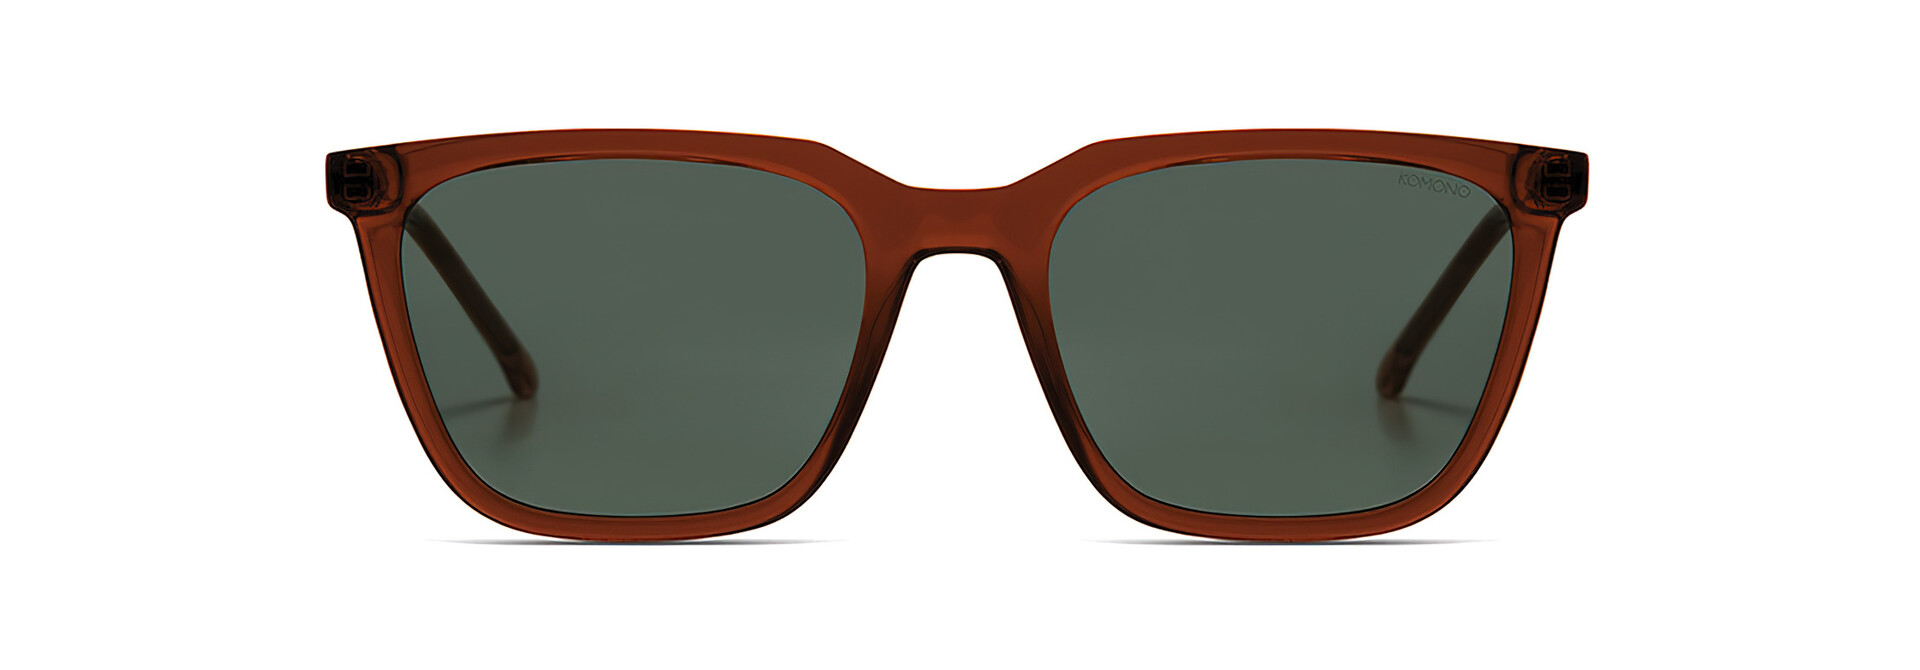 ♣ Jay Bronze Sunglasses